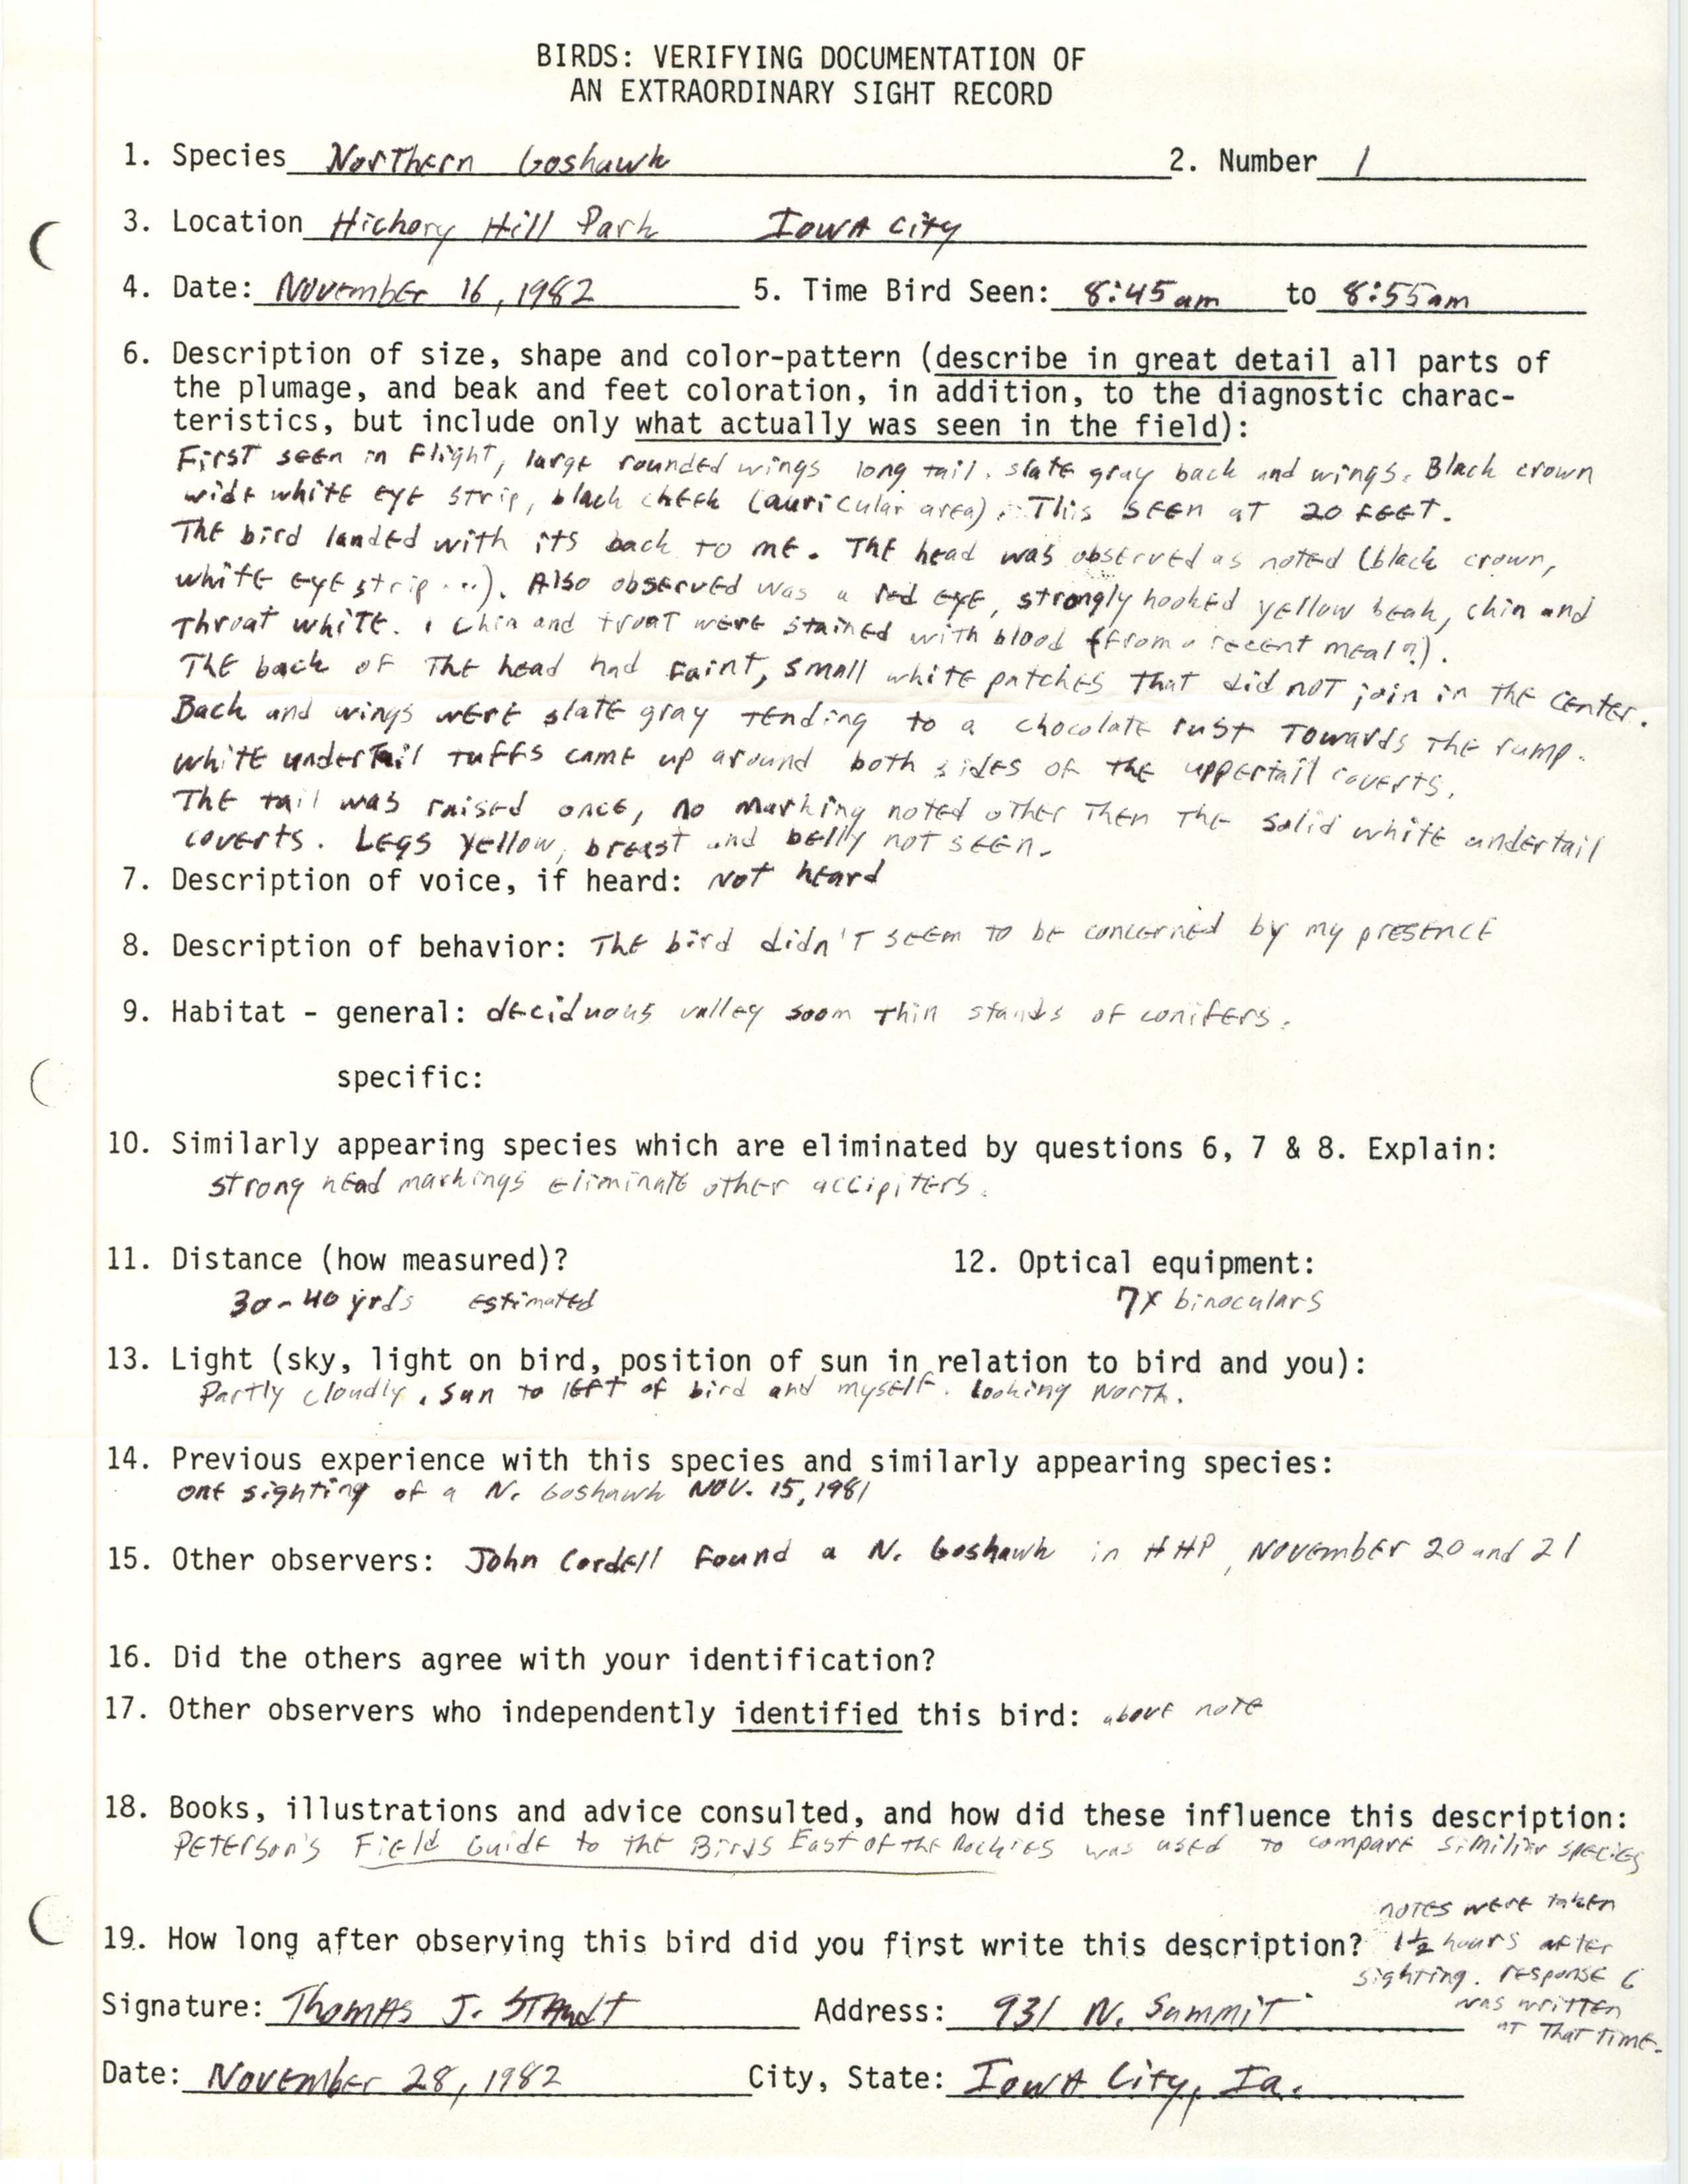 Rare bird documentation form for Northern Goshawk at Hickory Hill Park, 1982